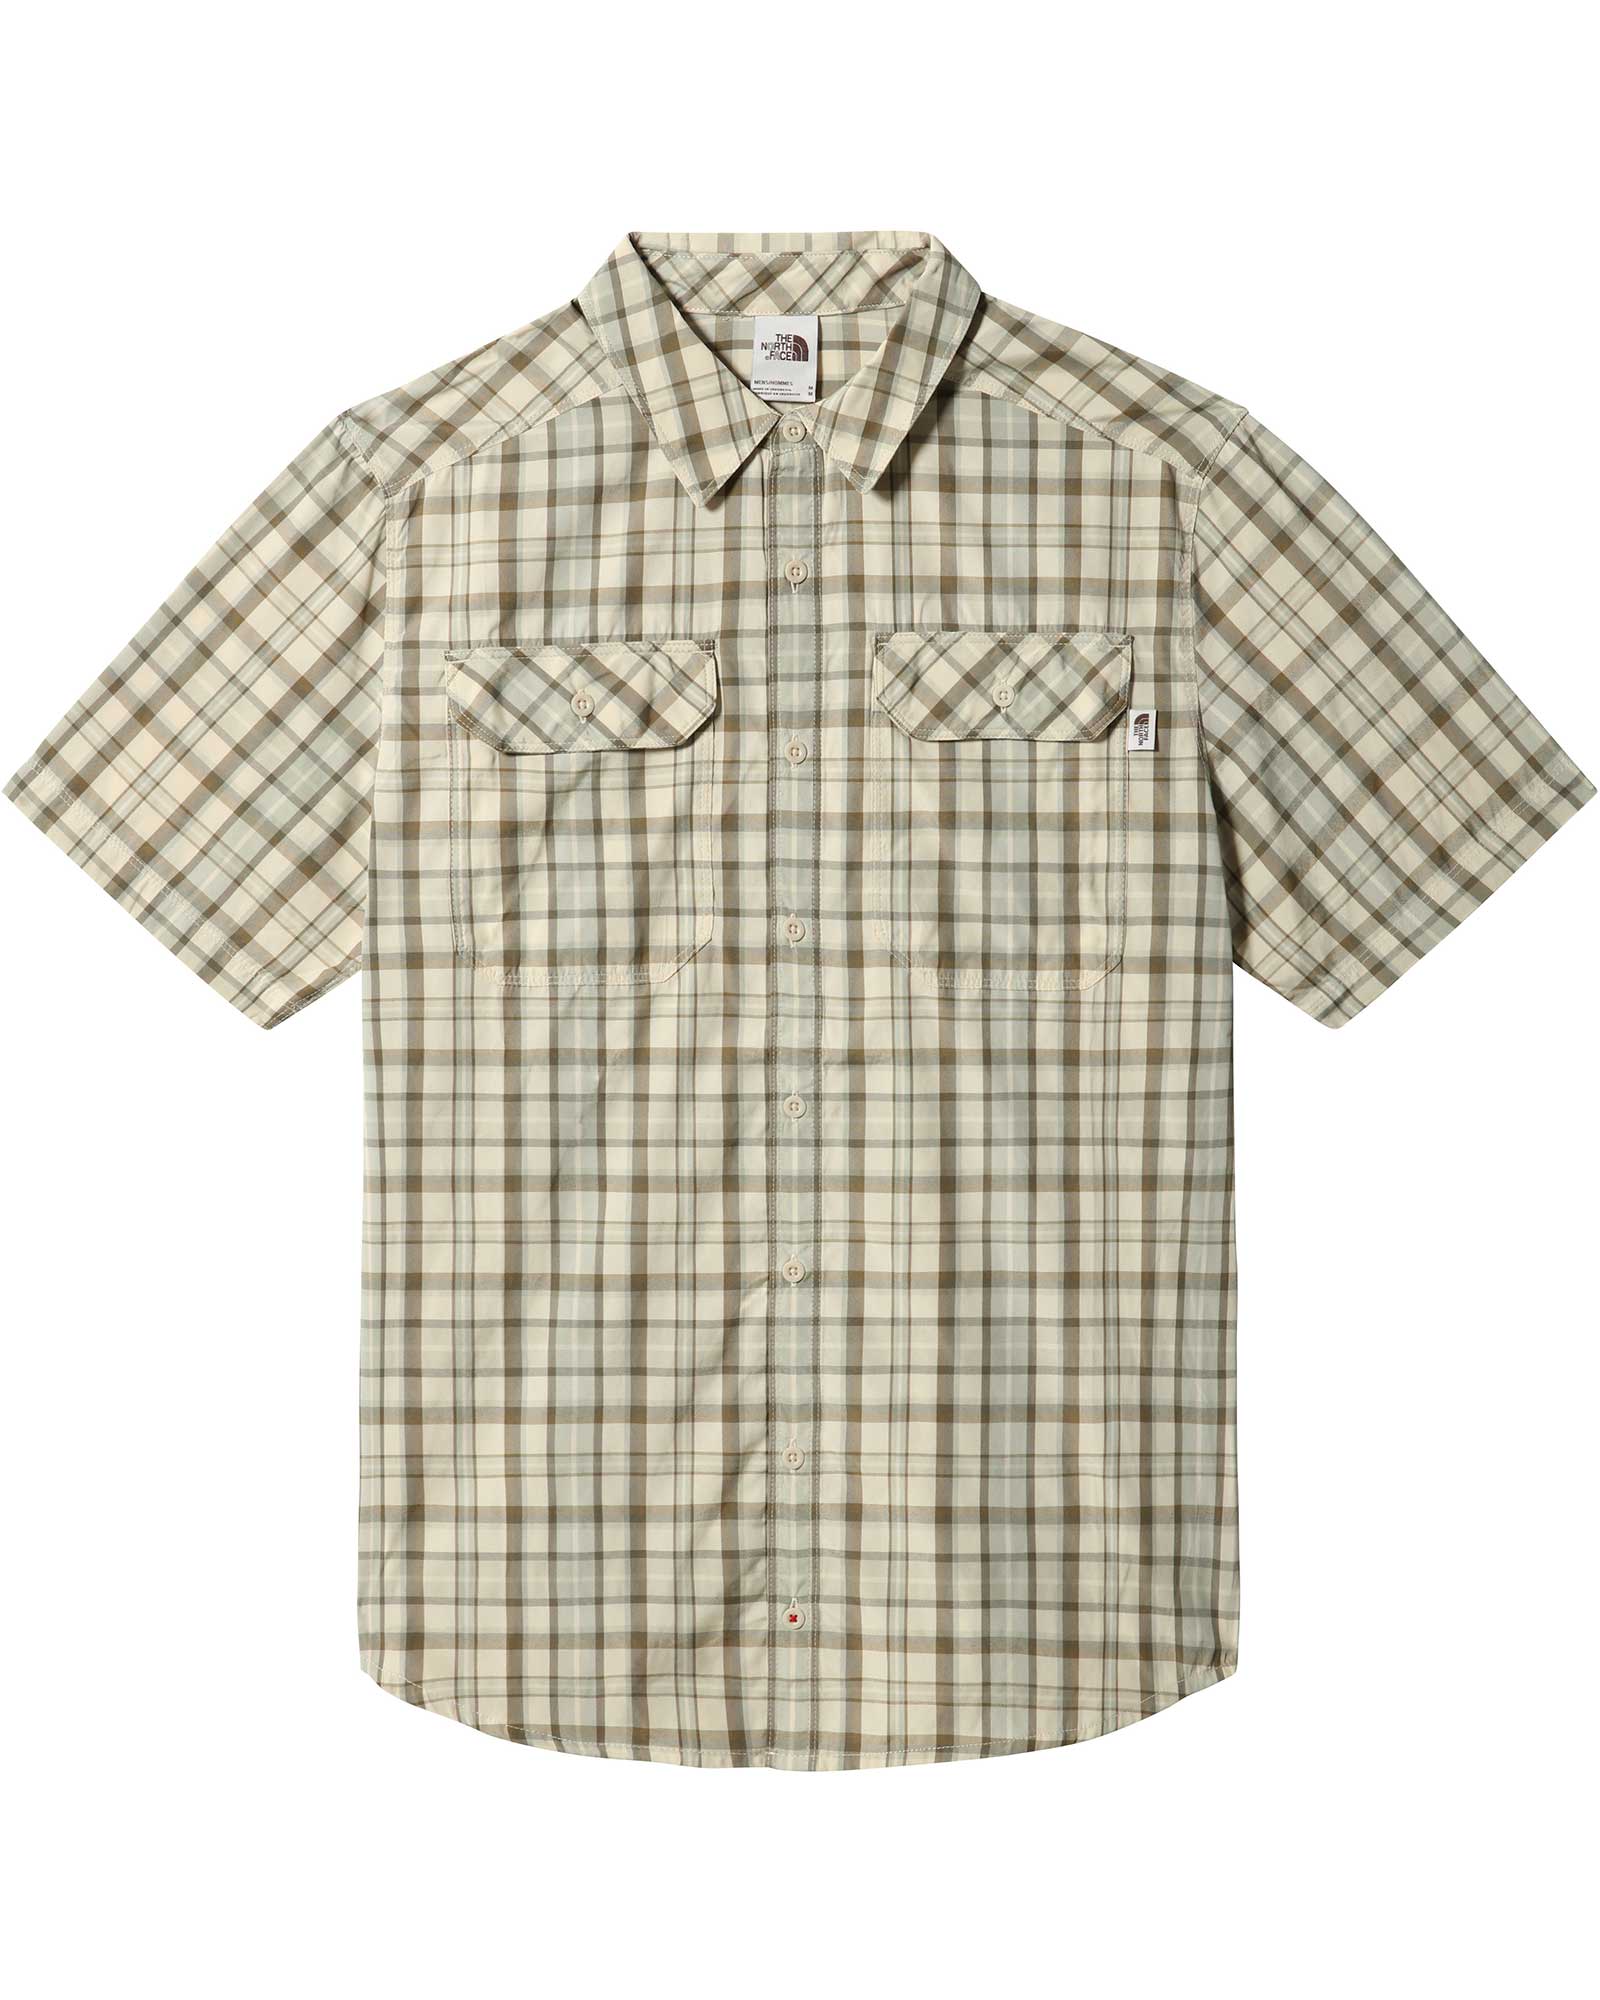 The North Face Pine Knot Men’s Shirt - Asphalt Grey Plaid S